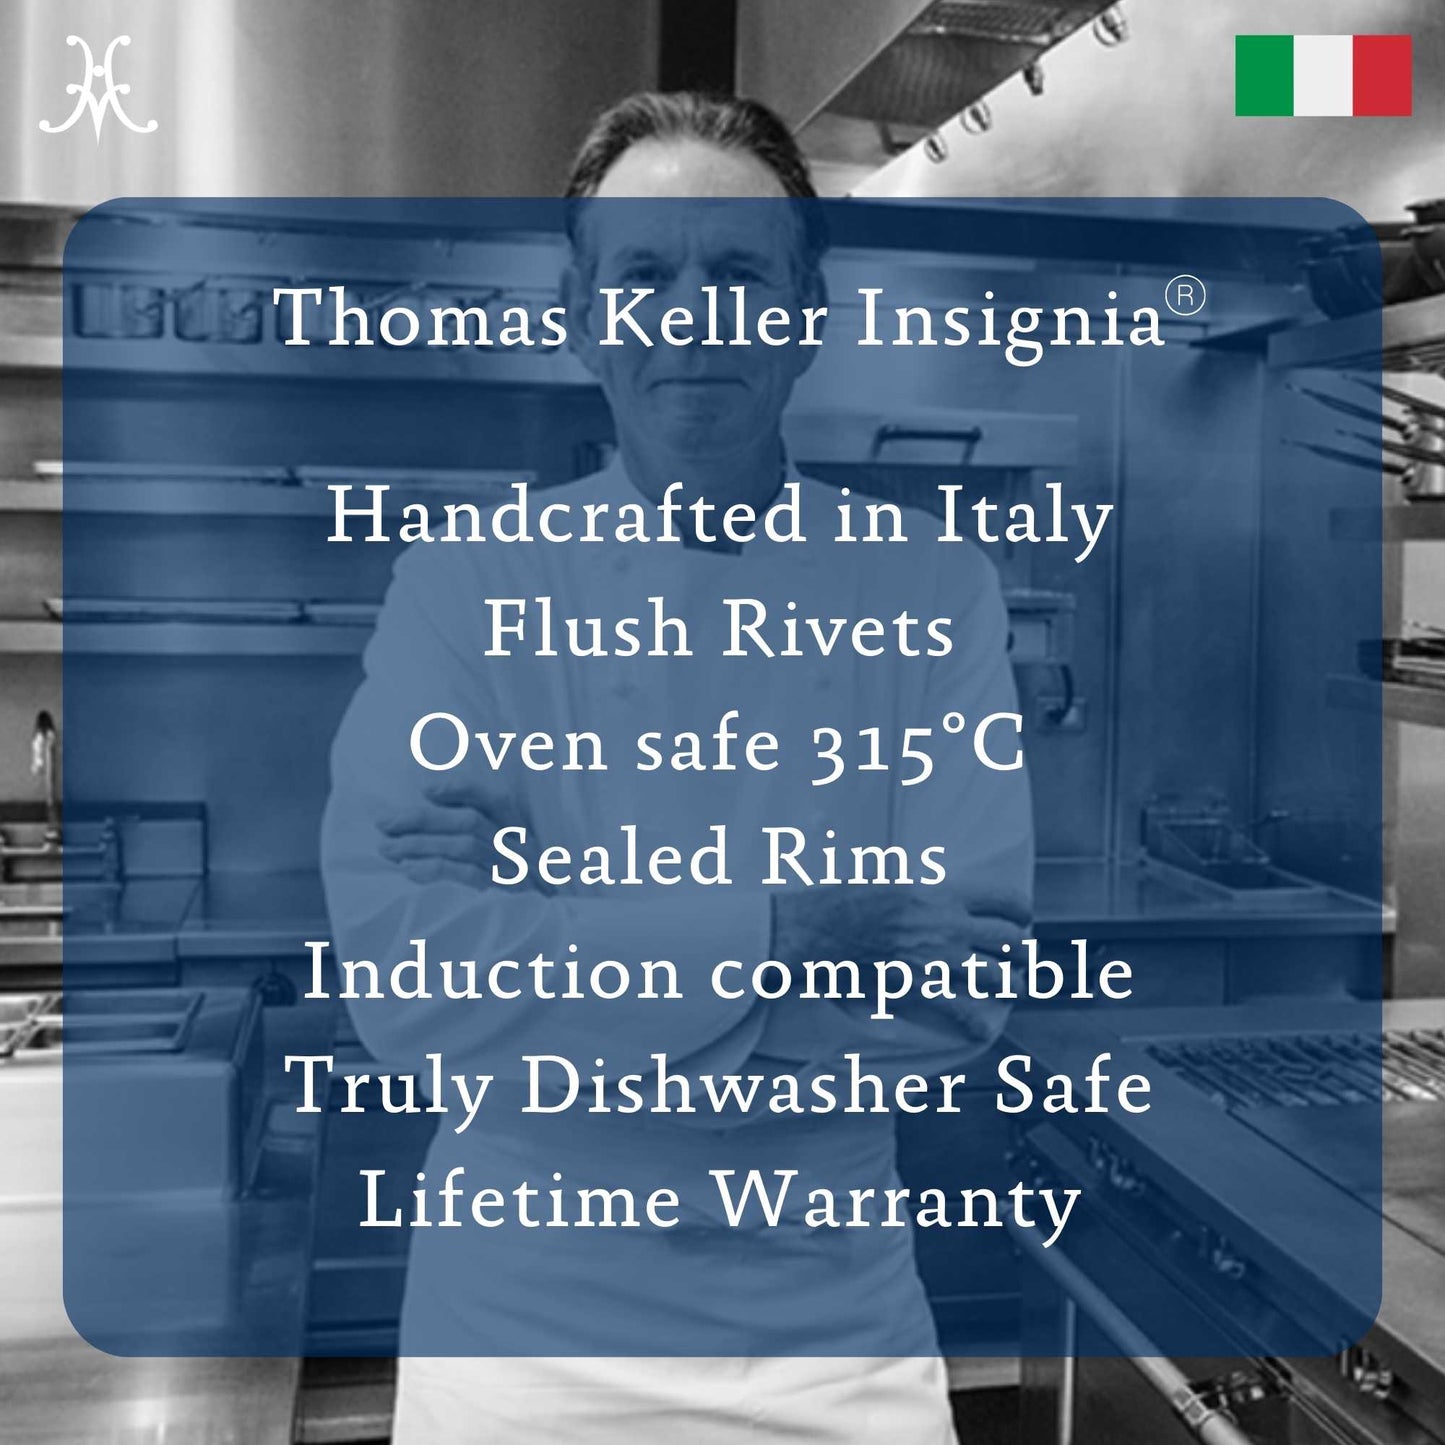 Hestan Thomas Keller Insignia Commerical Clad Stainless Steel Nonstick Open Skillet 28cm